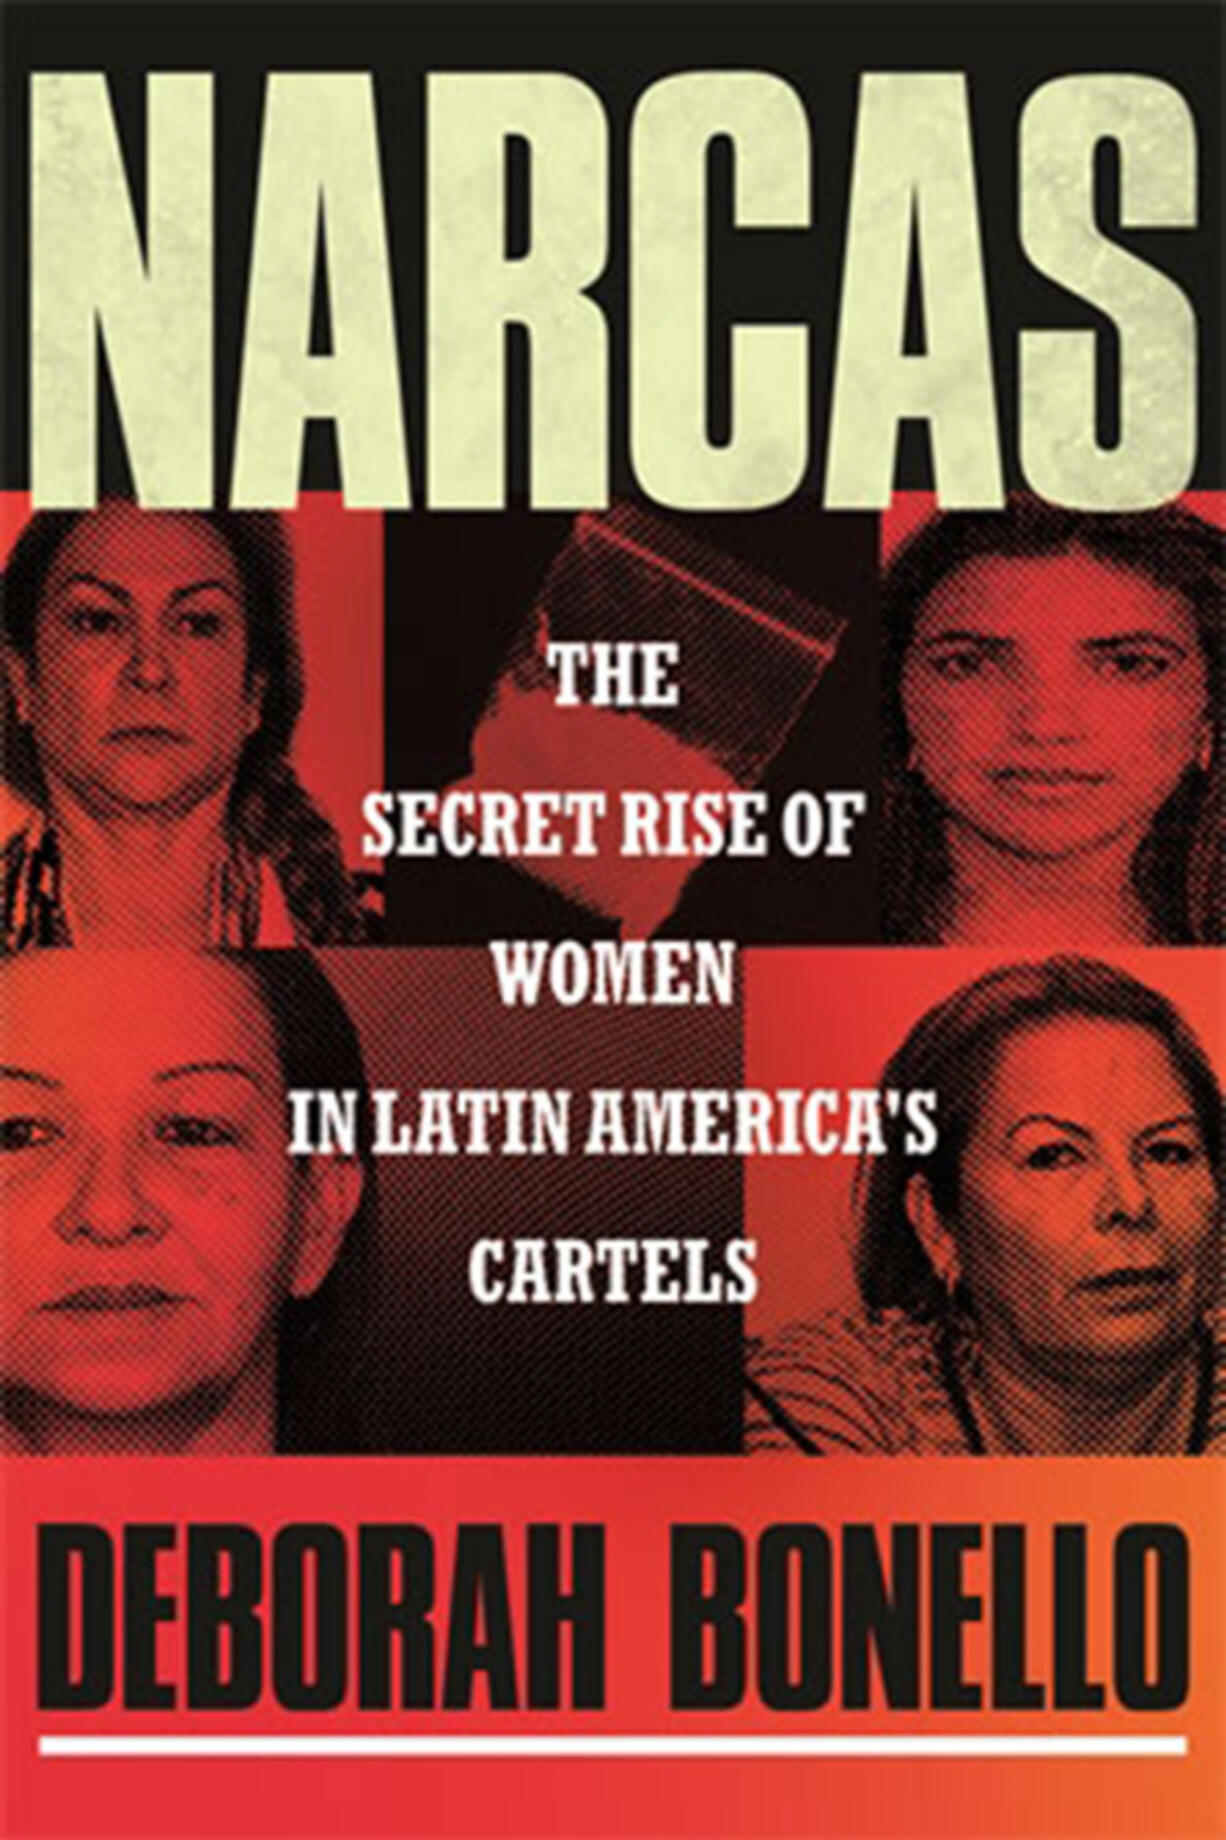 &ldquo;Narcas: The Secret Rise of Women in Latin America&Ccedil;&fnof;&Ugrave;s Cartels&rdquo; by Deborah Bonello.